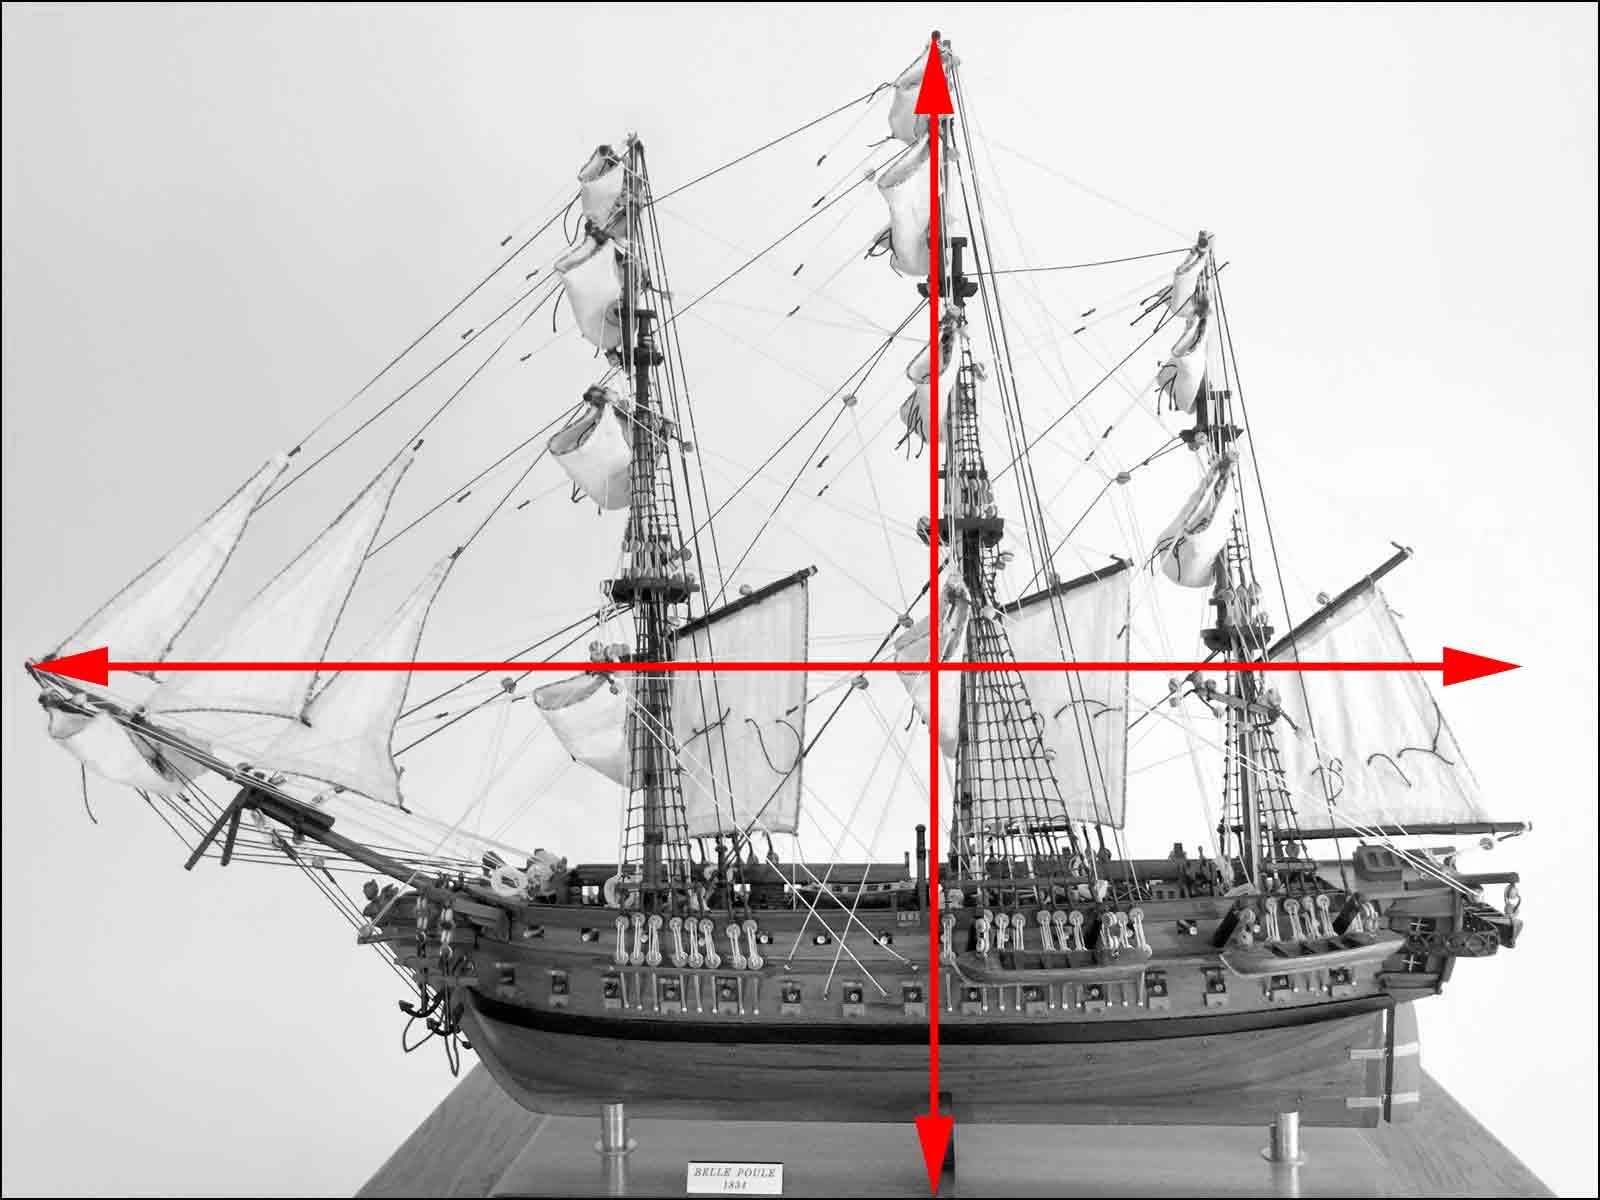 medium scale Belle Poule ship model